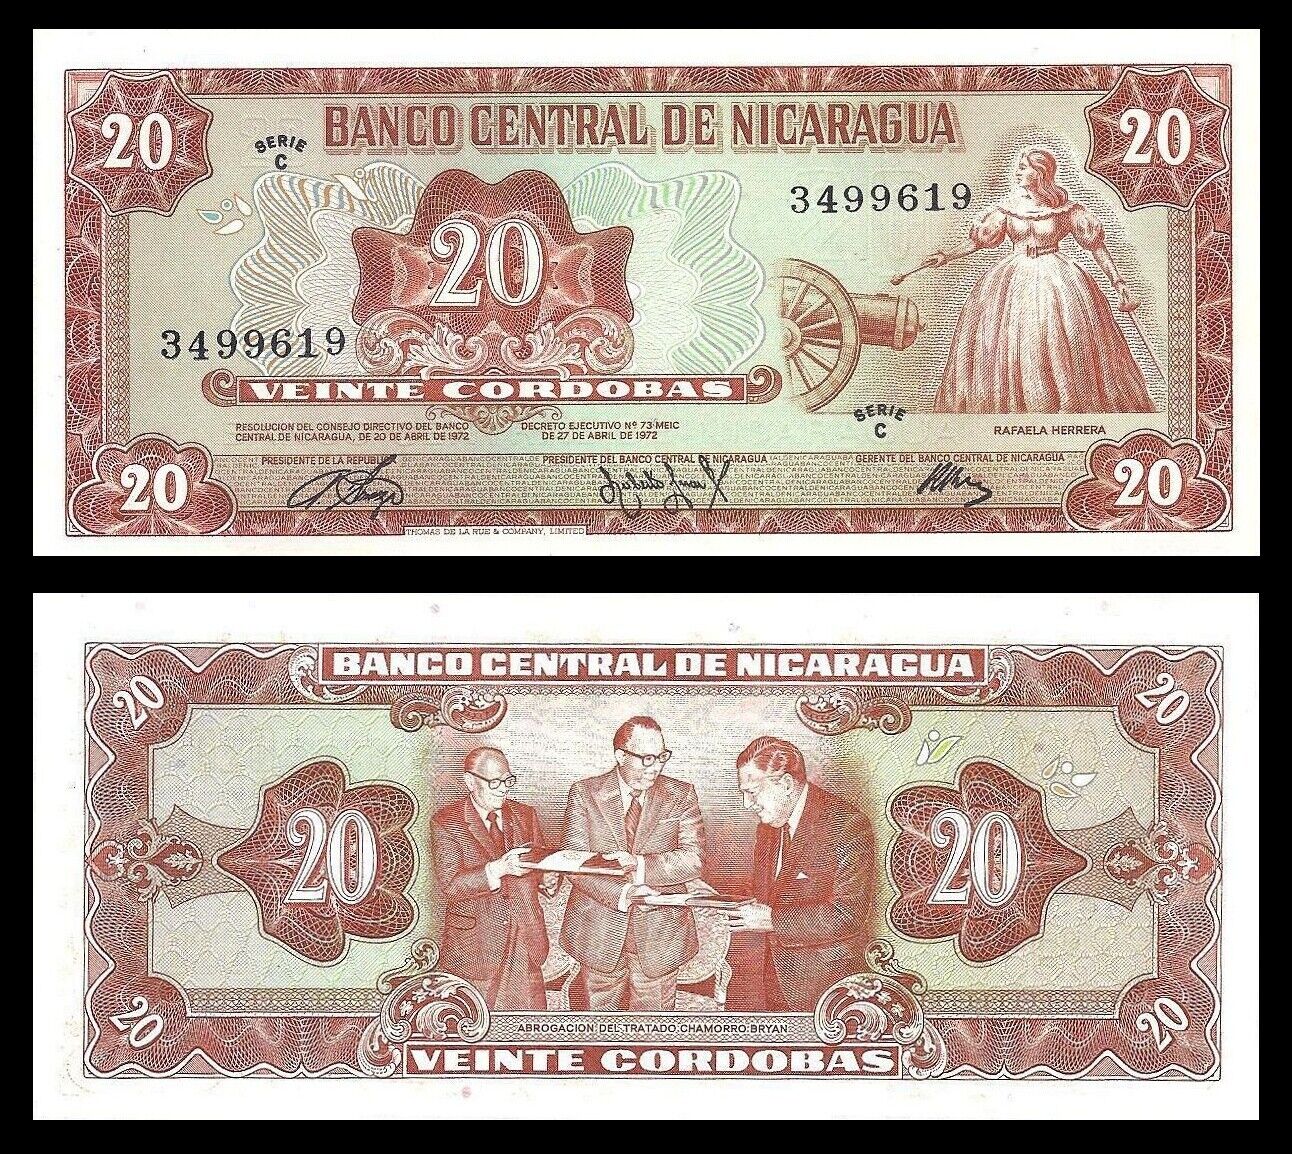 Nicaragua 20 Cordobas D. 1972 P-124 Series C Unc Uncirculated Banknote